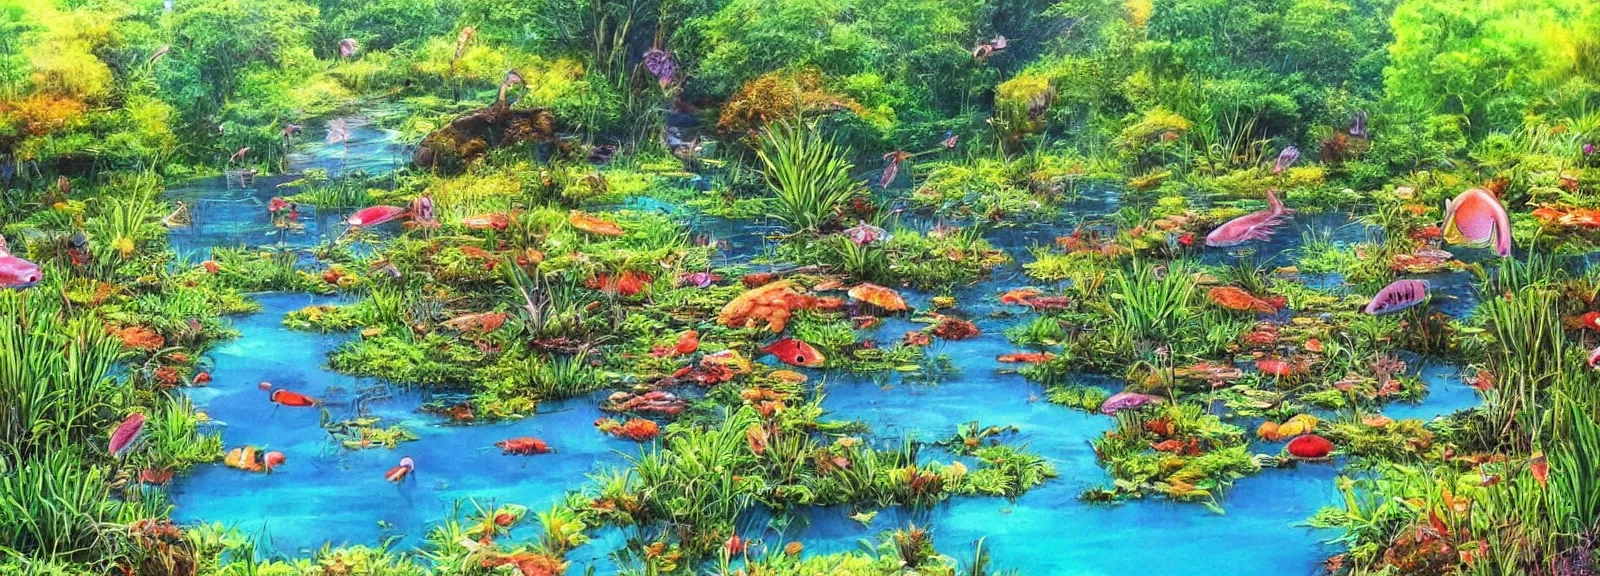 Image similar to romantic colorful nature scene, many ponds, prehistoric fish, lush alien vegetation